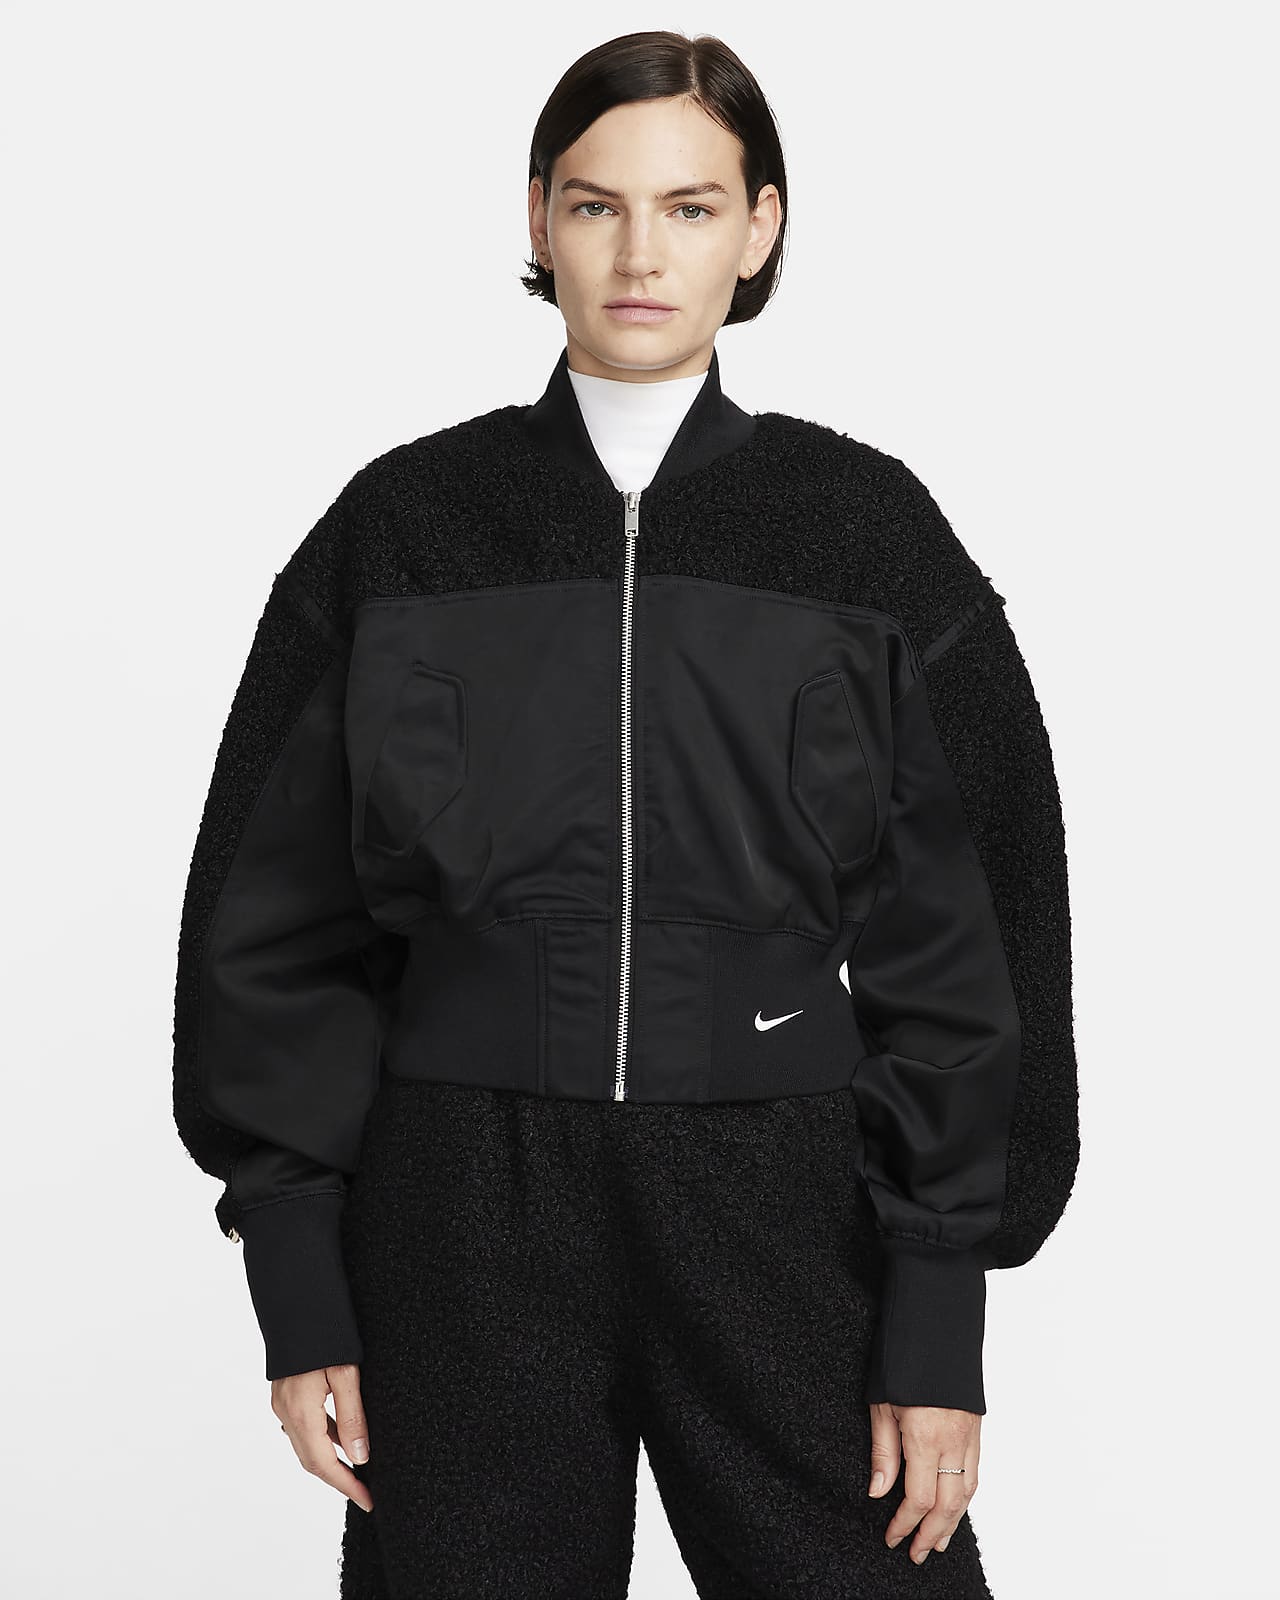 Nike Sportswear Collection Damen-Bomberjacke aus hochflorigem Fleece